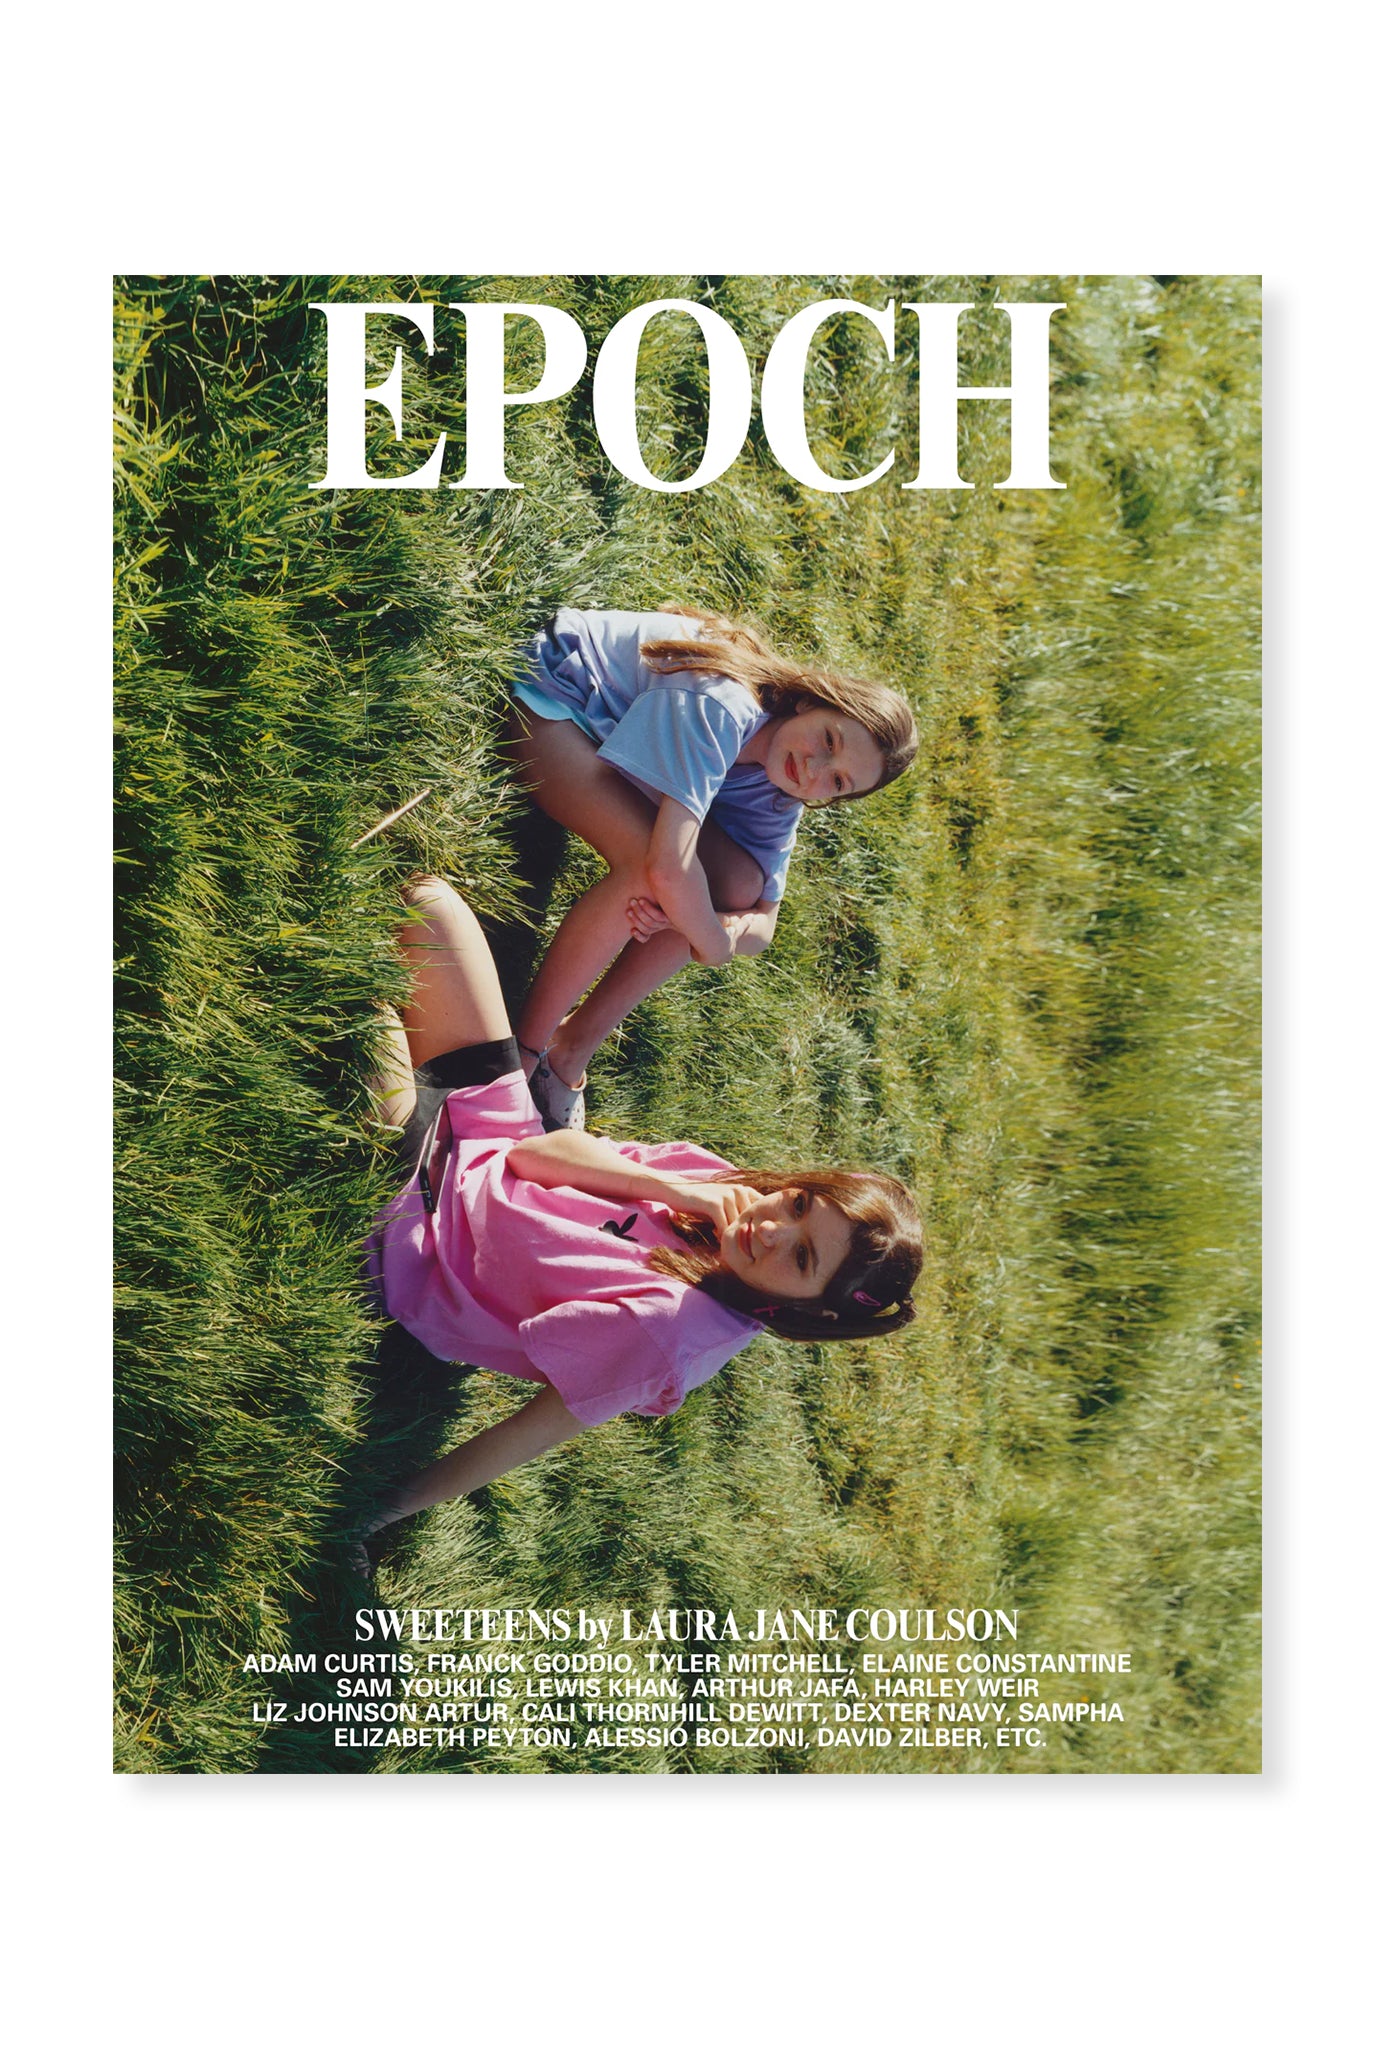 Epoch, Issue 2